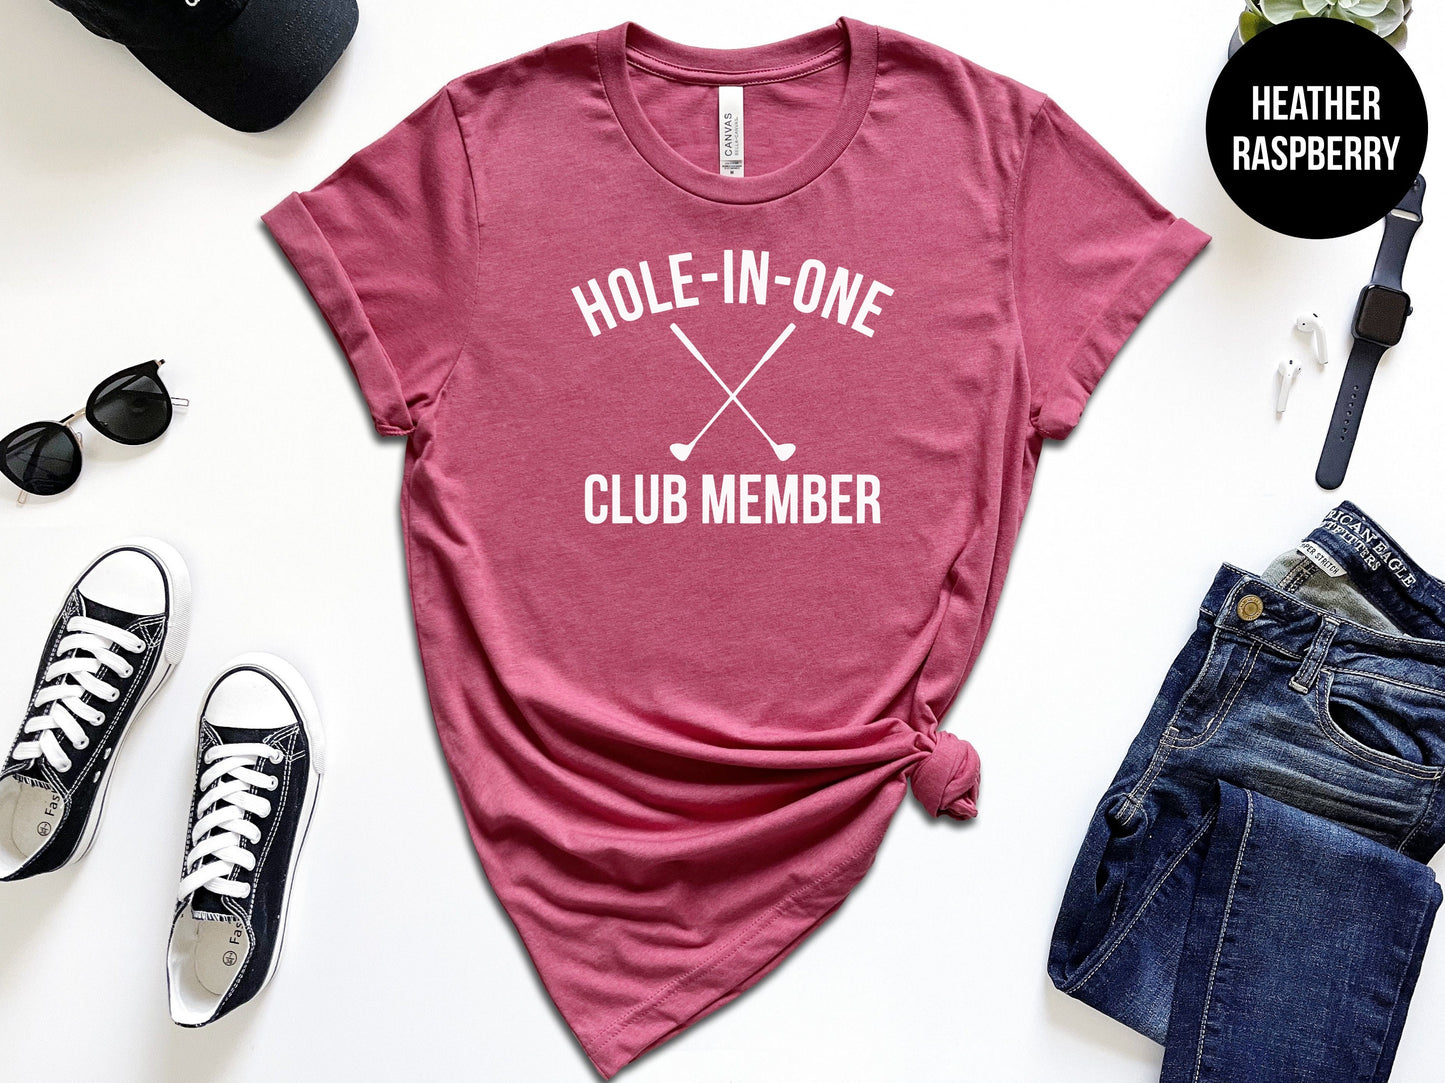 Hole in One Club